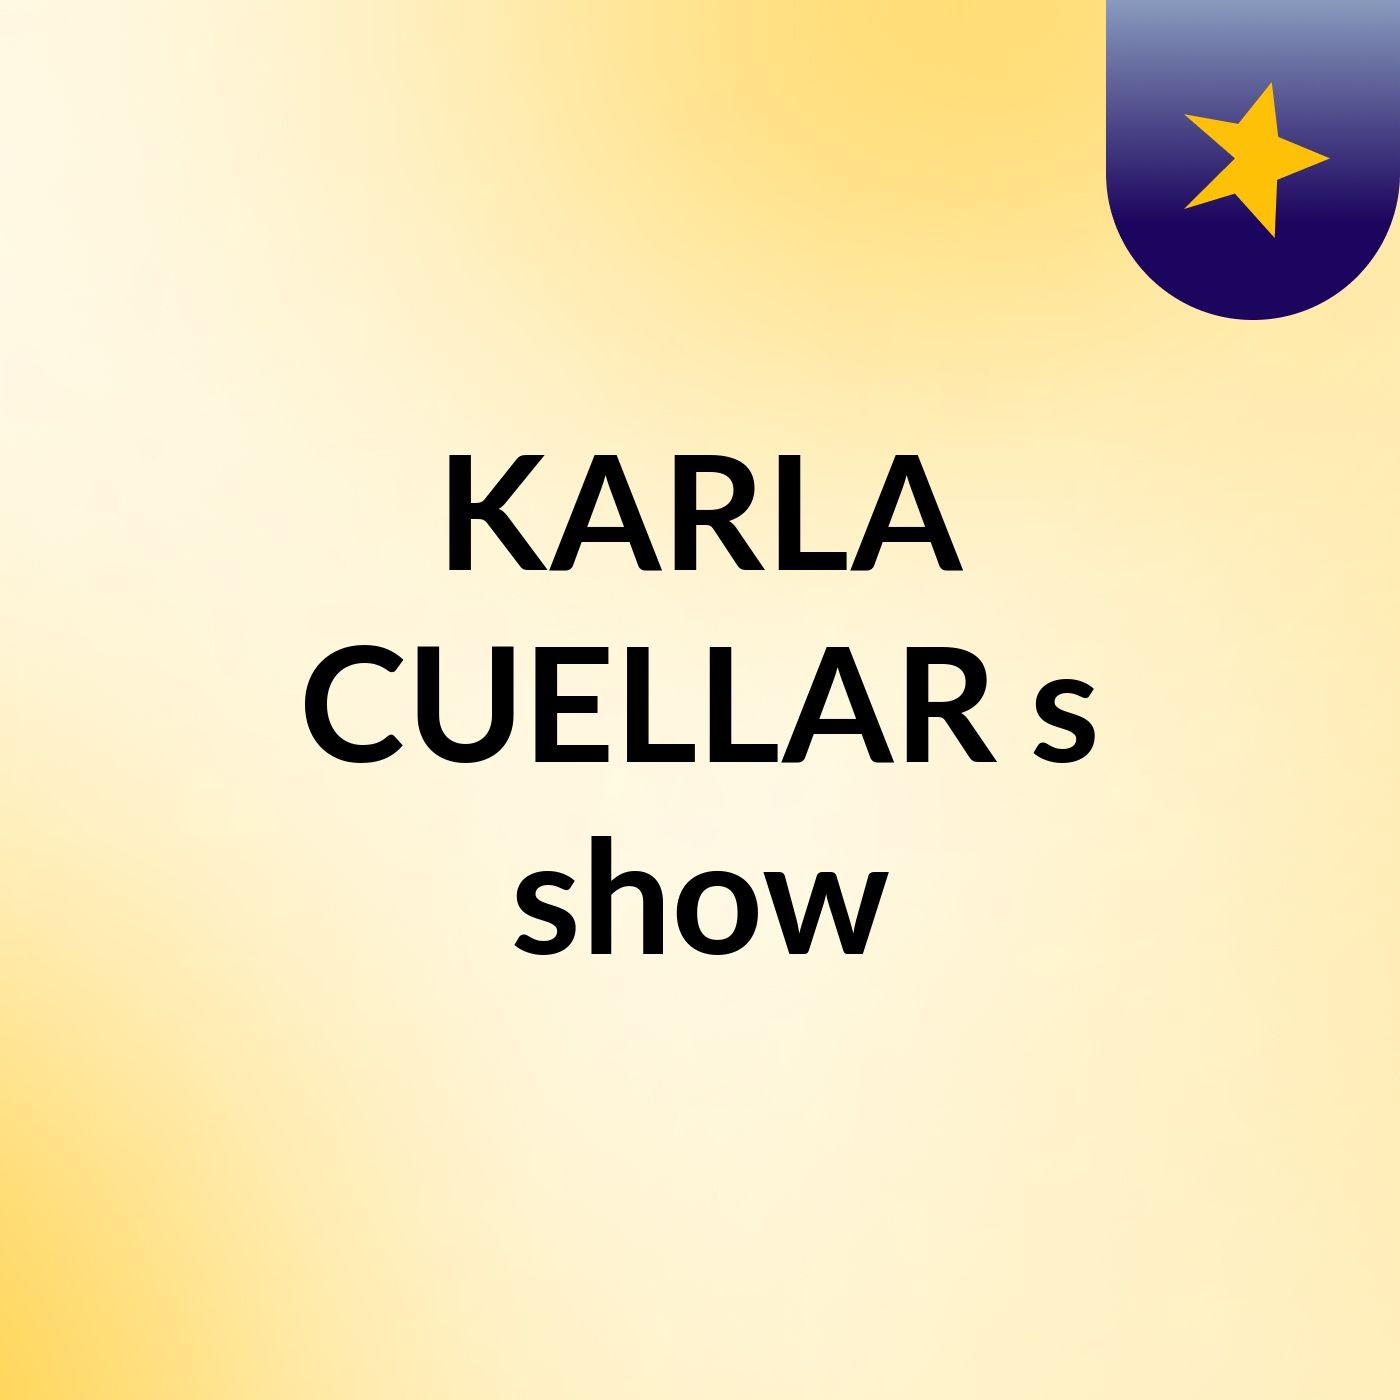 KARLA CUELLAR's show